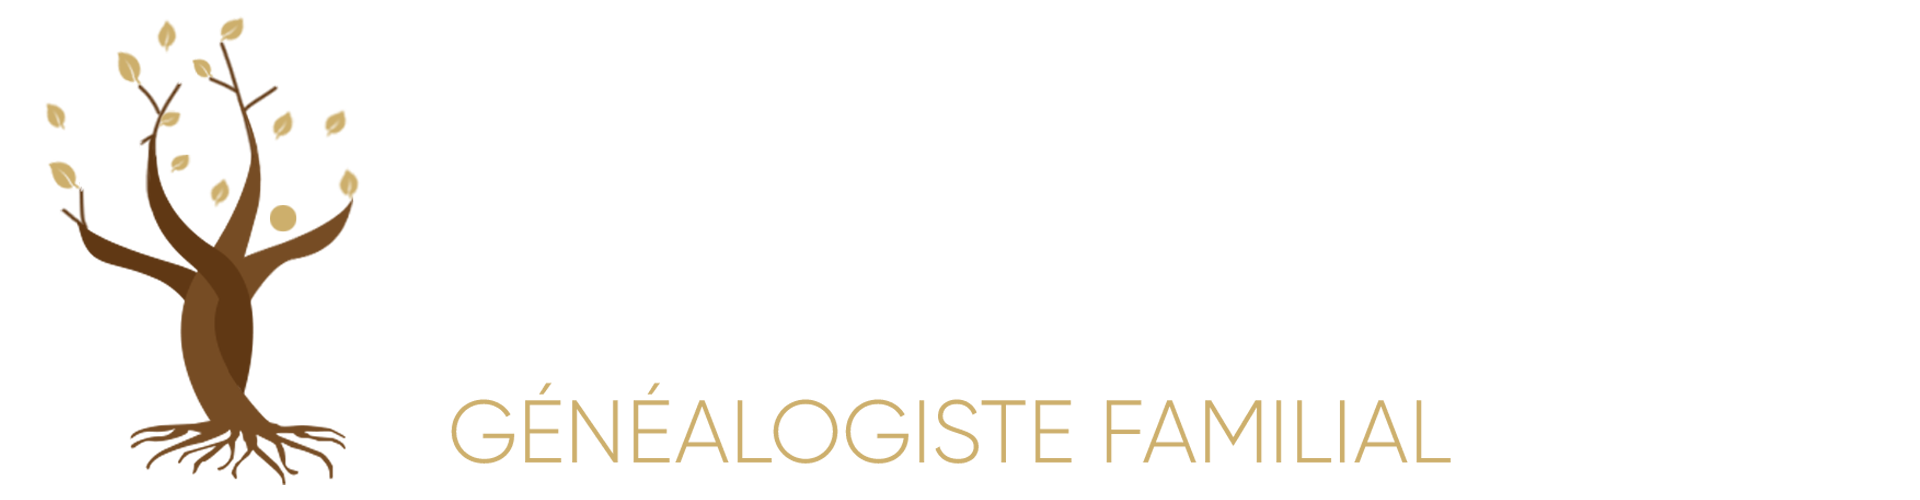 Racines et Familles - Logo blanc